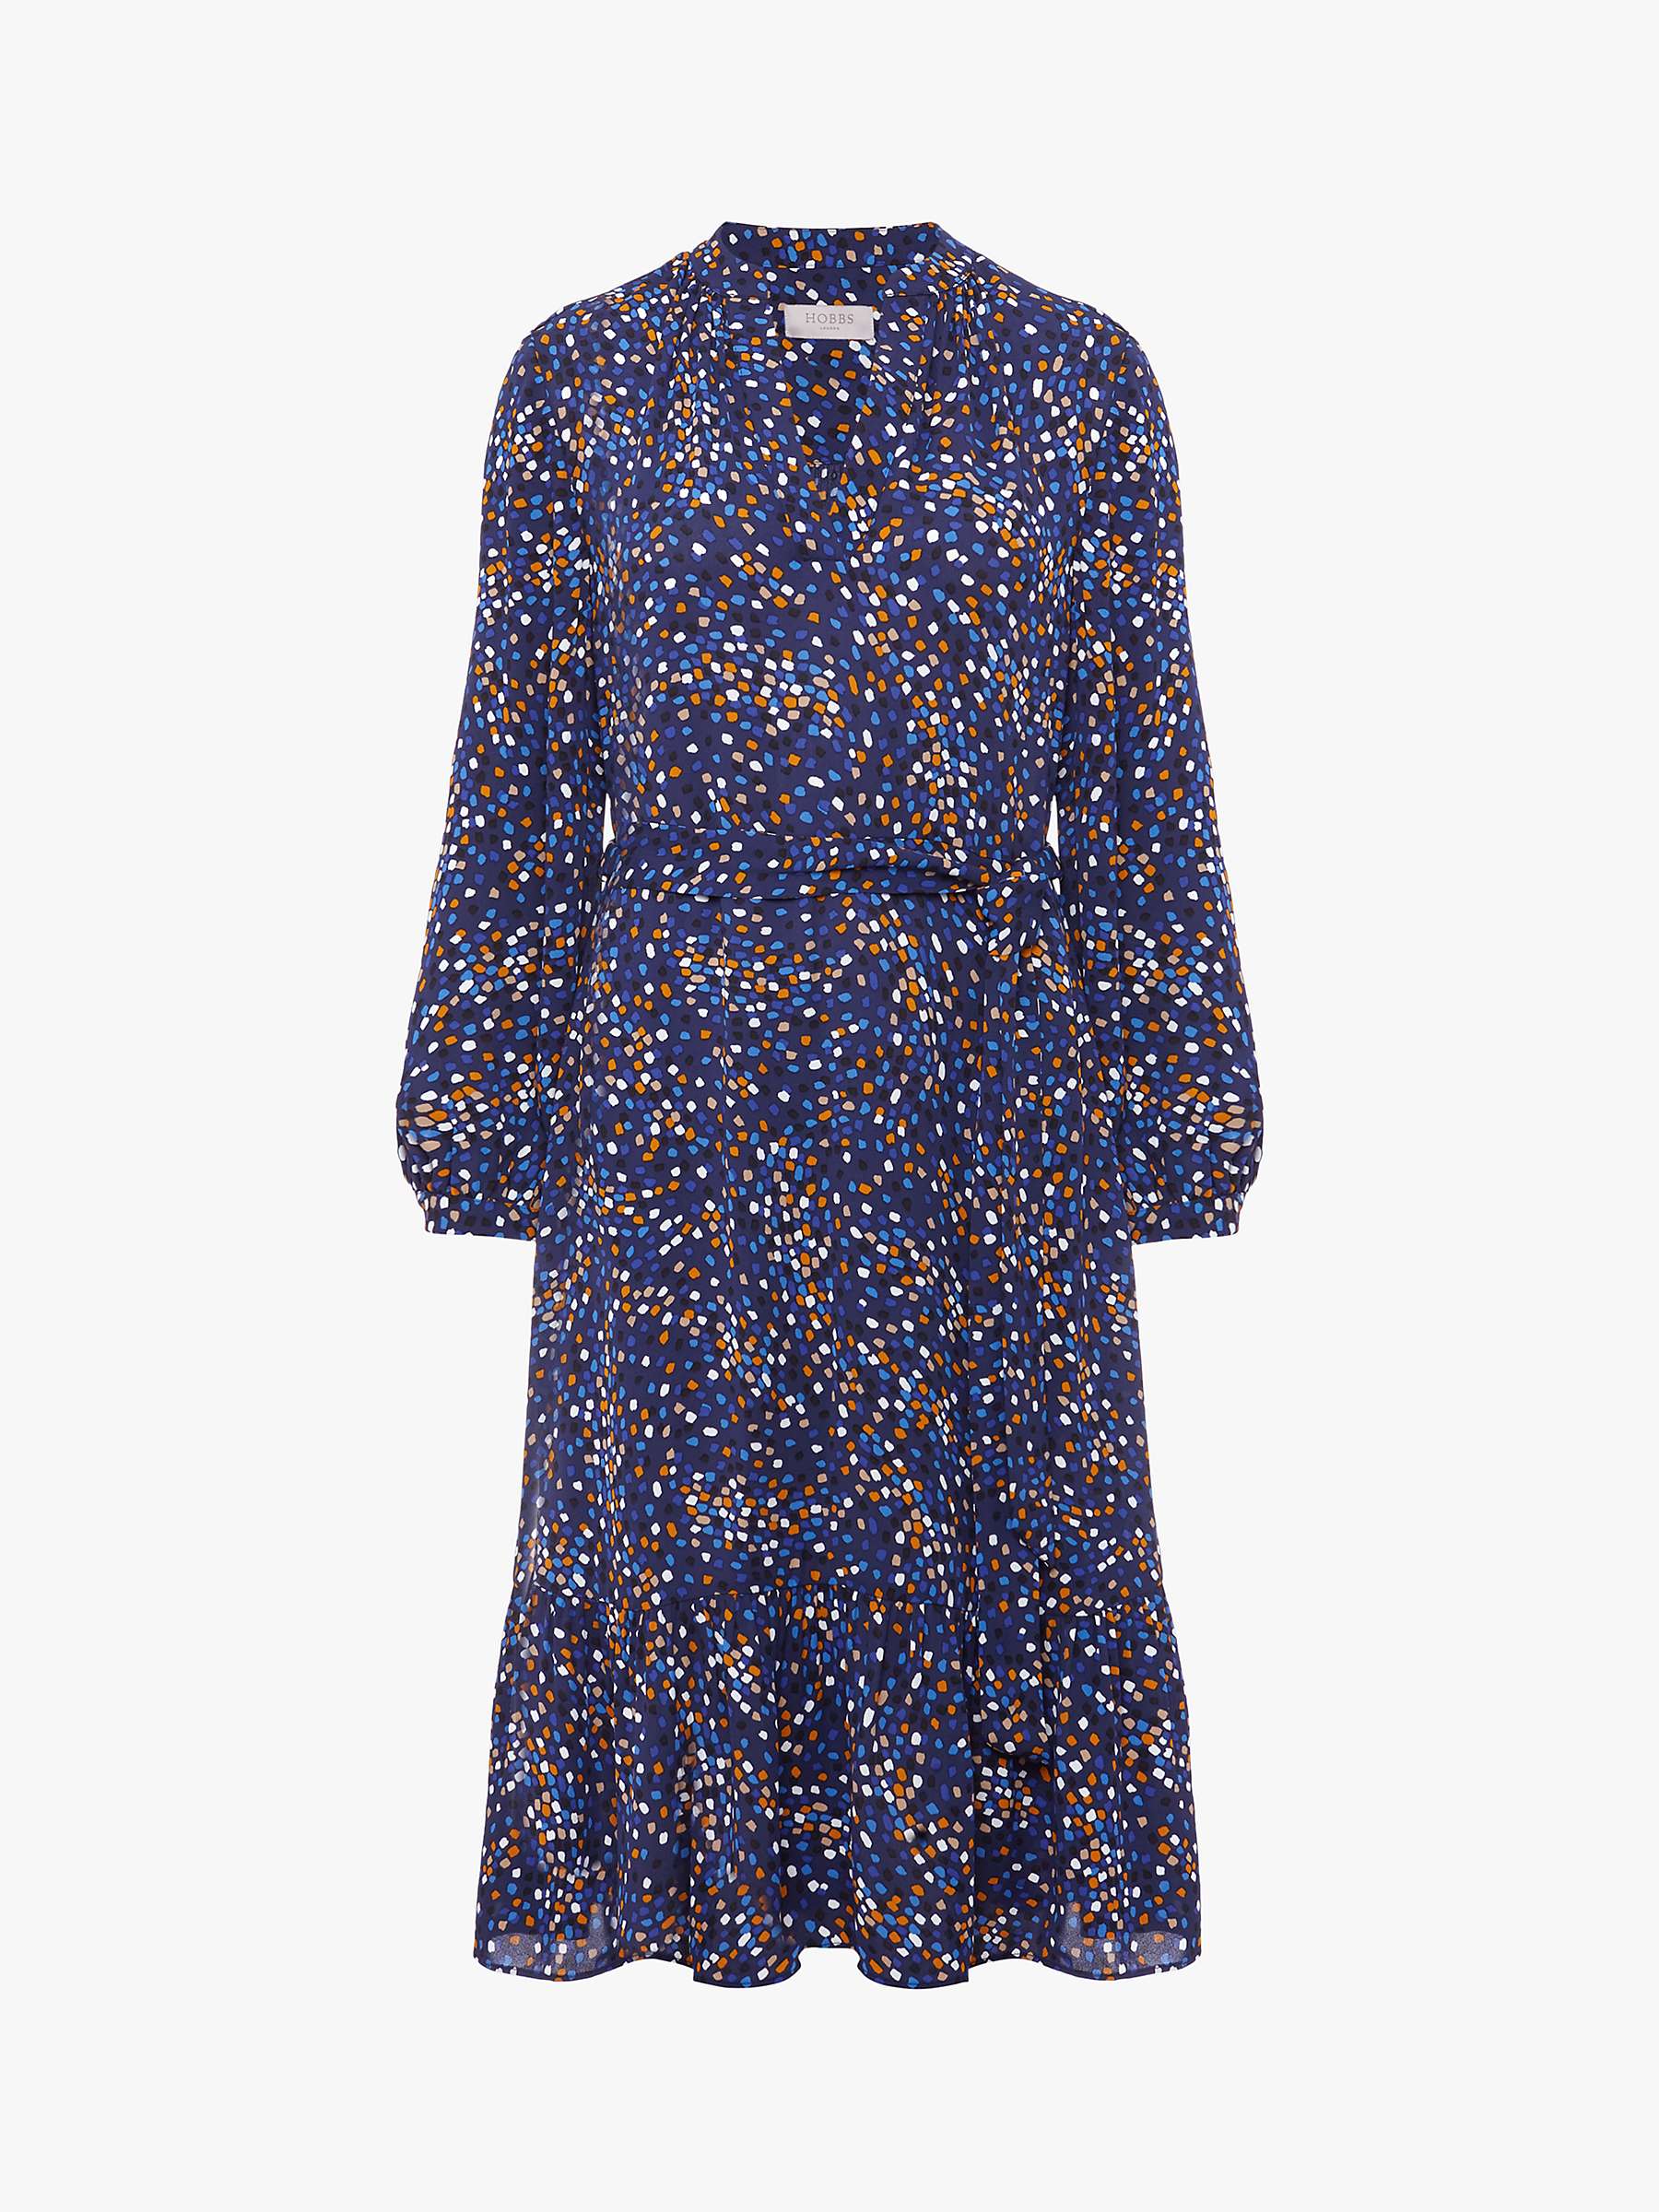 Hobbs Mallory Dress, Blue/Multi at John Lewis & Partners